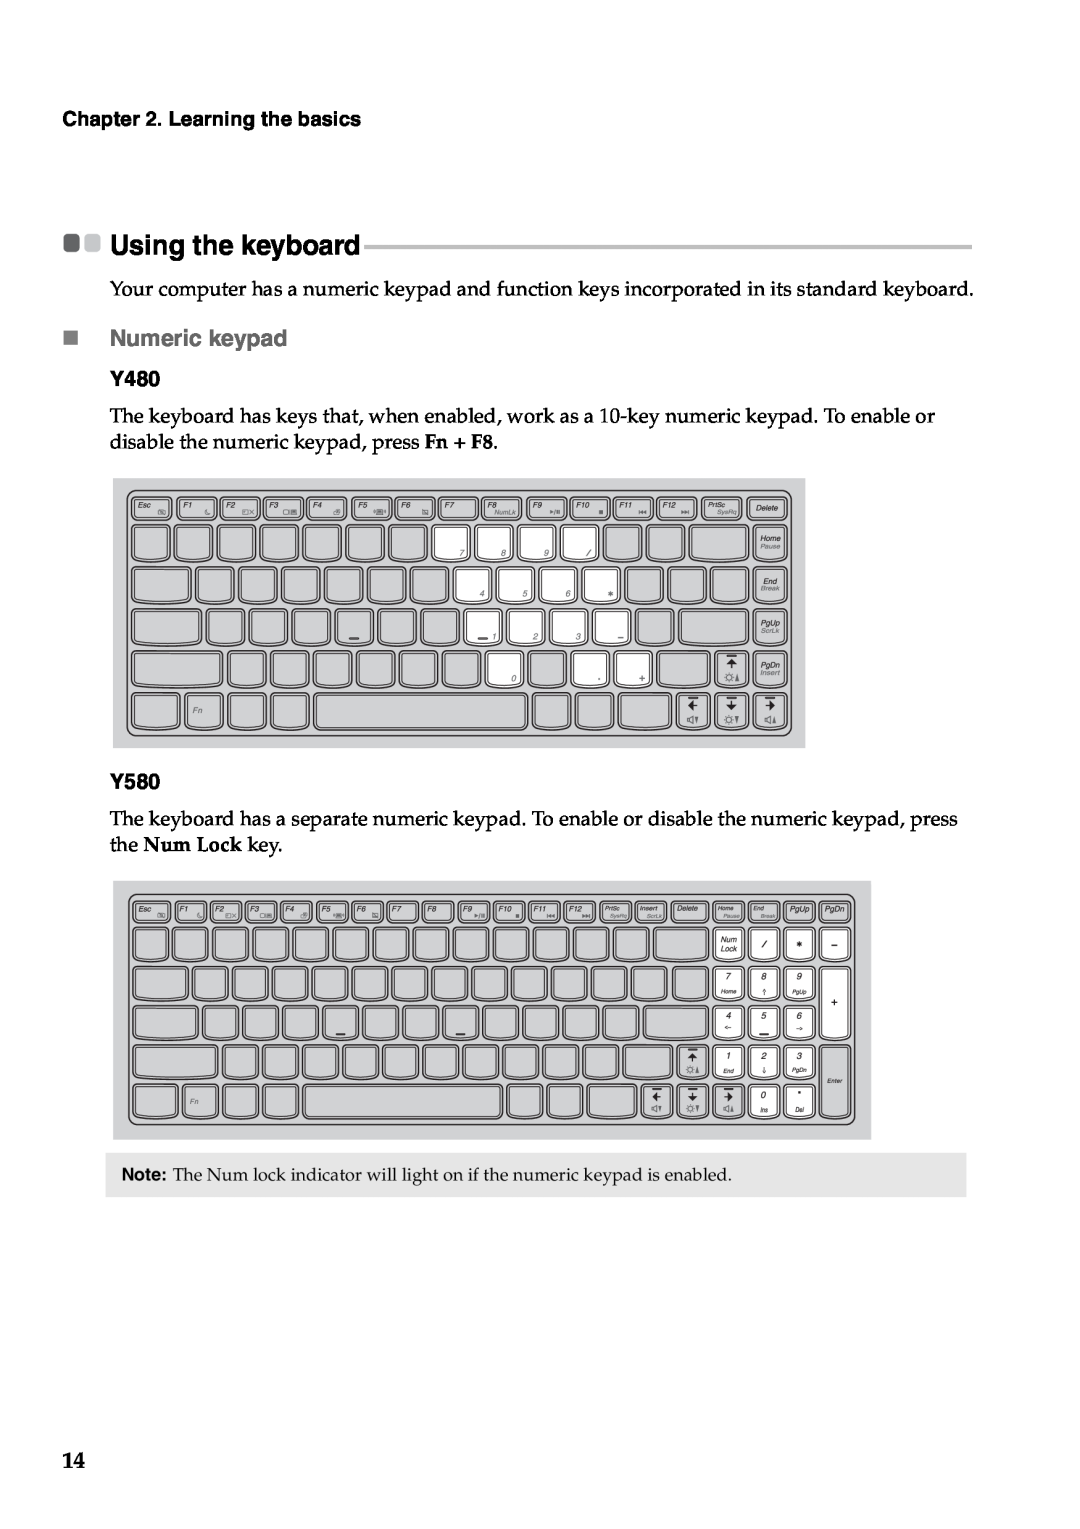 Lenovo Y580 manual „ Numeric keypad, Using the keyboard, Y480, Learning the basics 